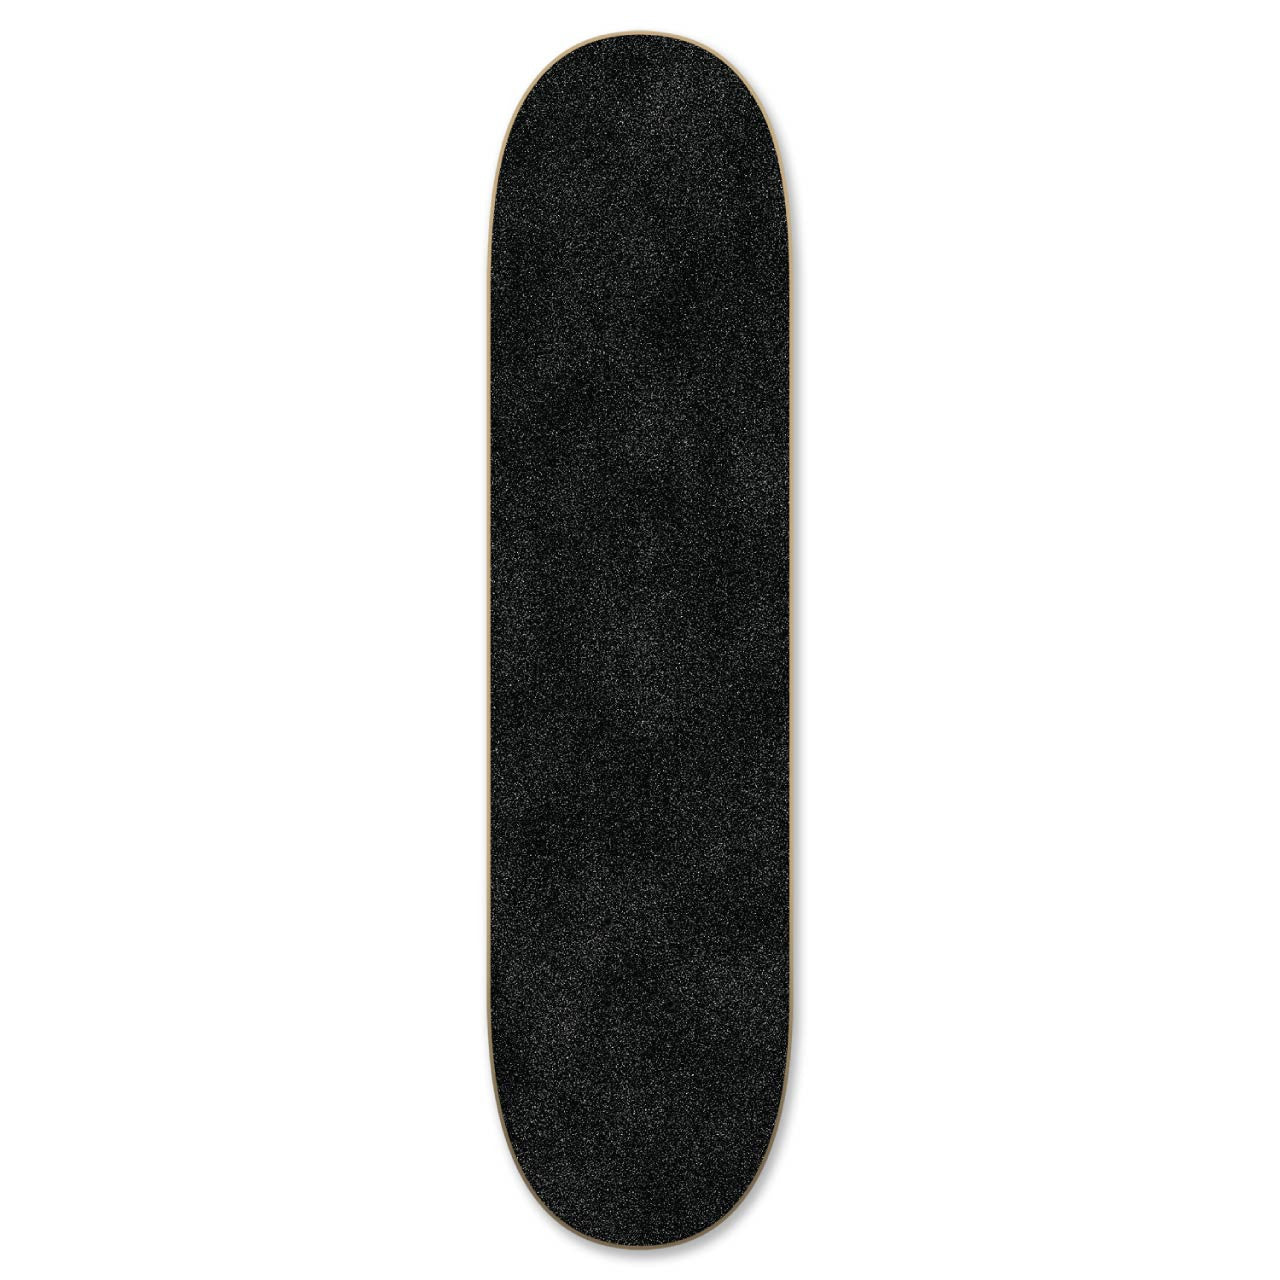 Graphic Skateboard Deck - Bandana Blue